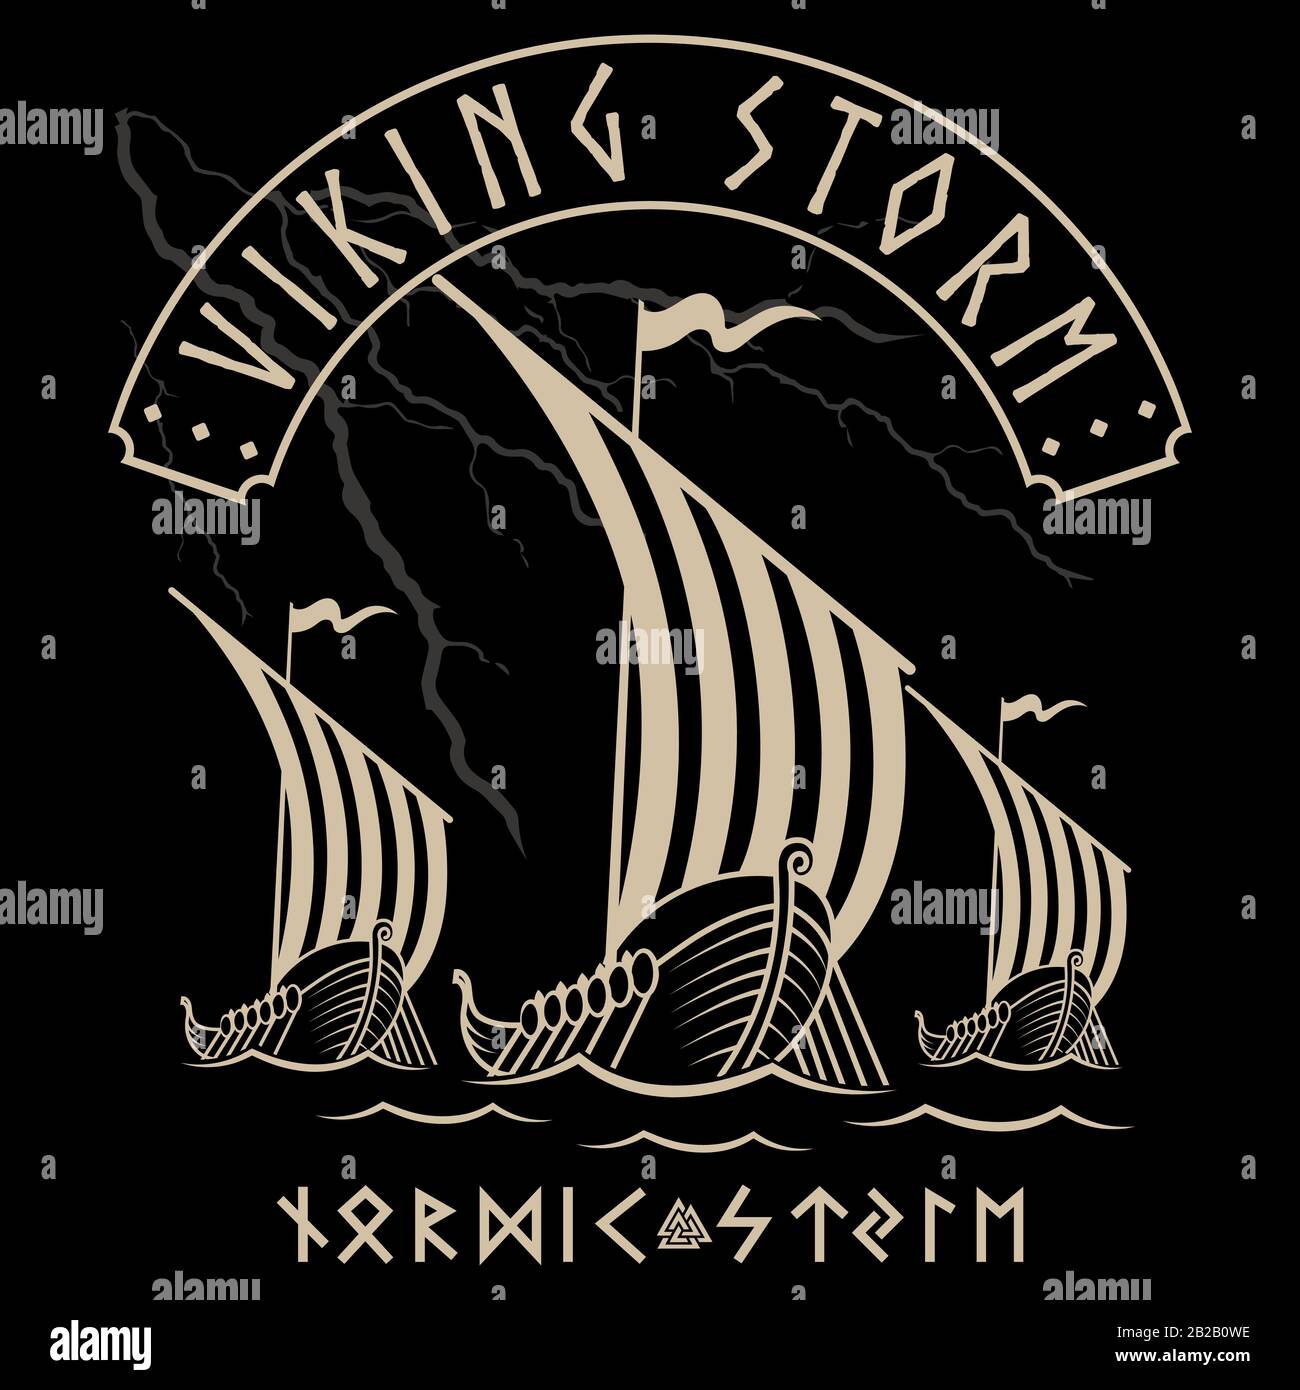 Nave da guerra dei Vichinghi. Drakkar, Viking design, antica nave scandinava e rune norse Illustrazione Vettoriale